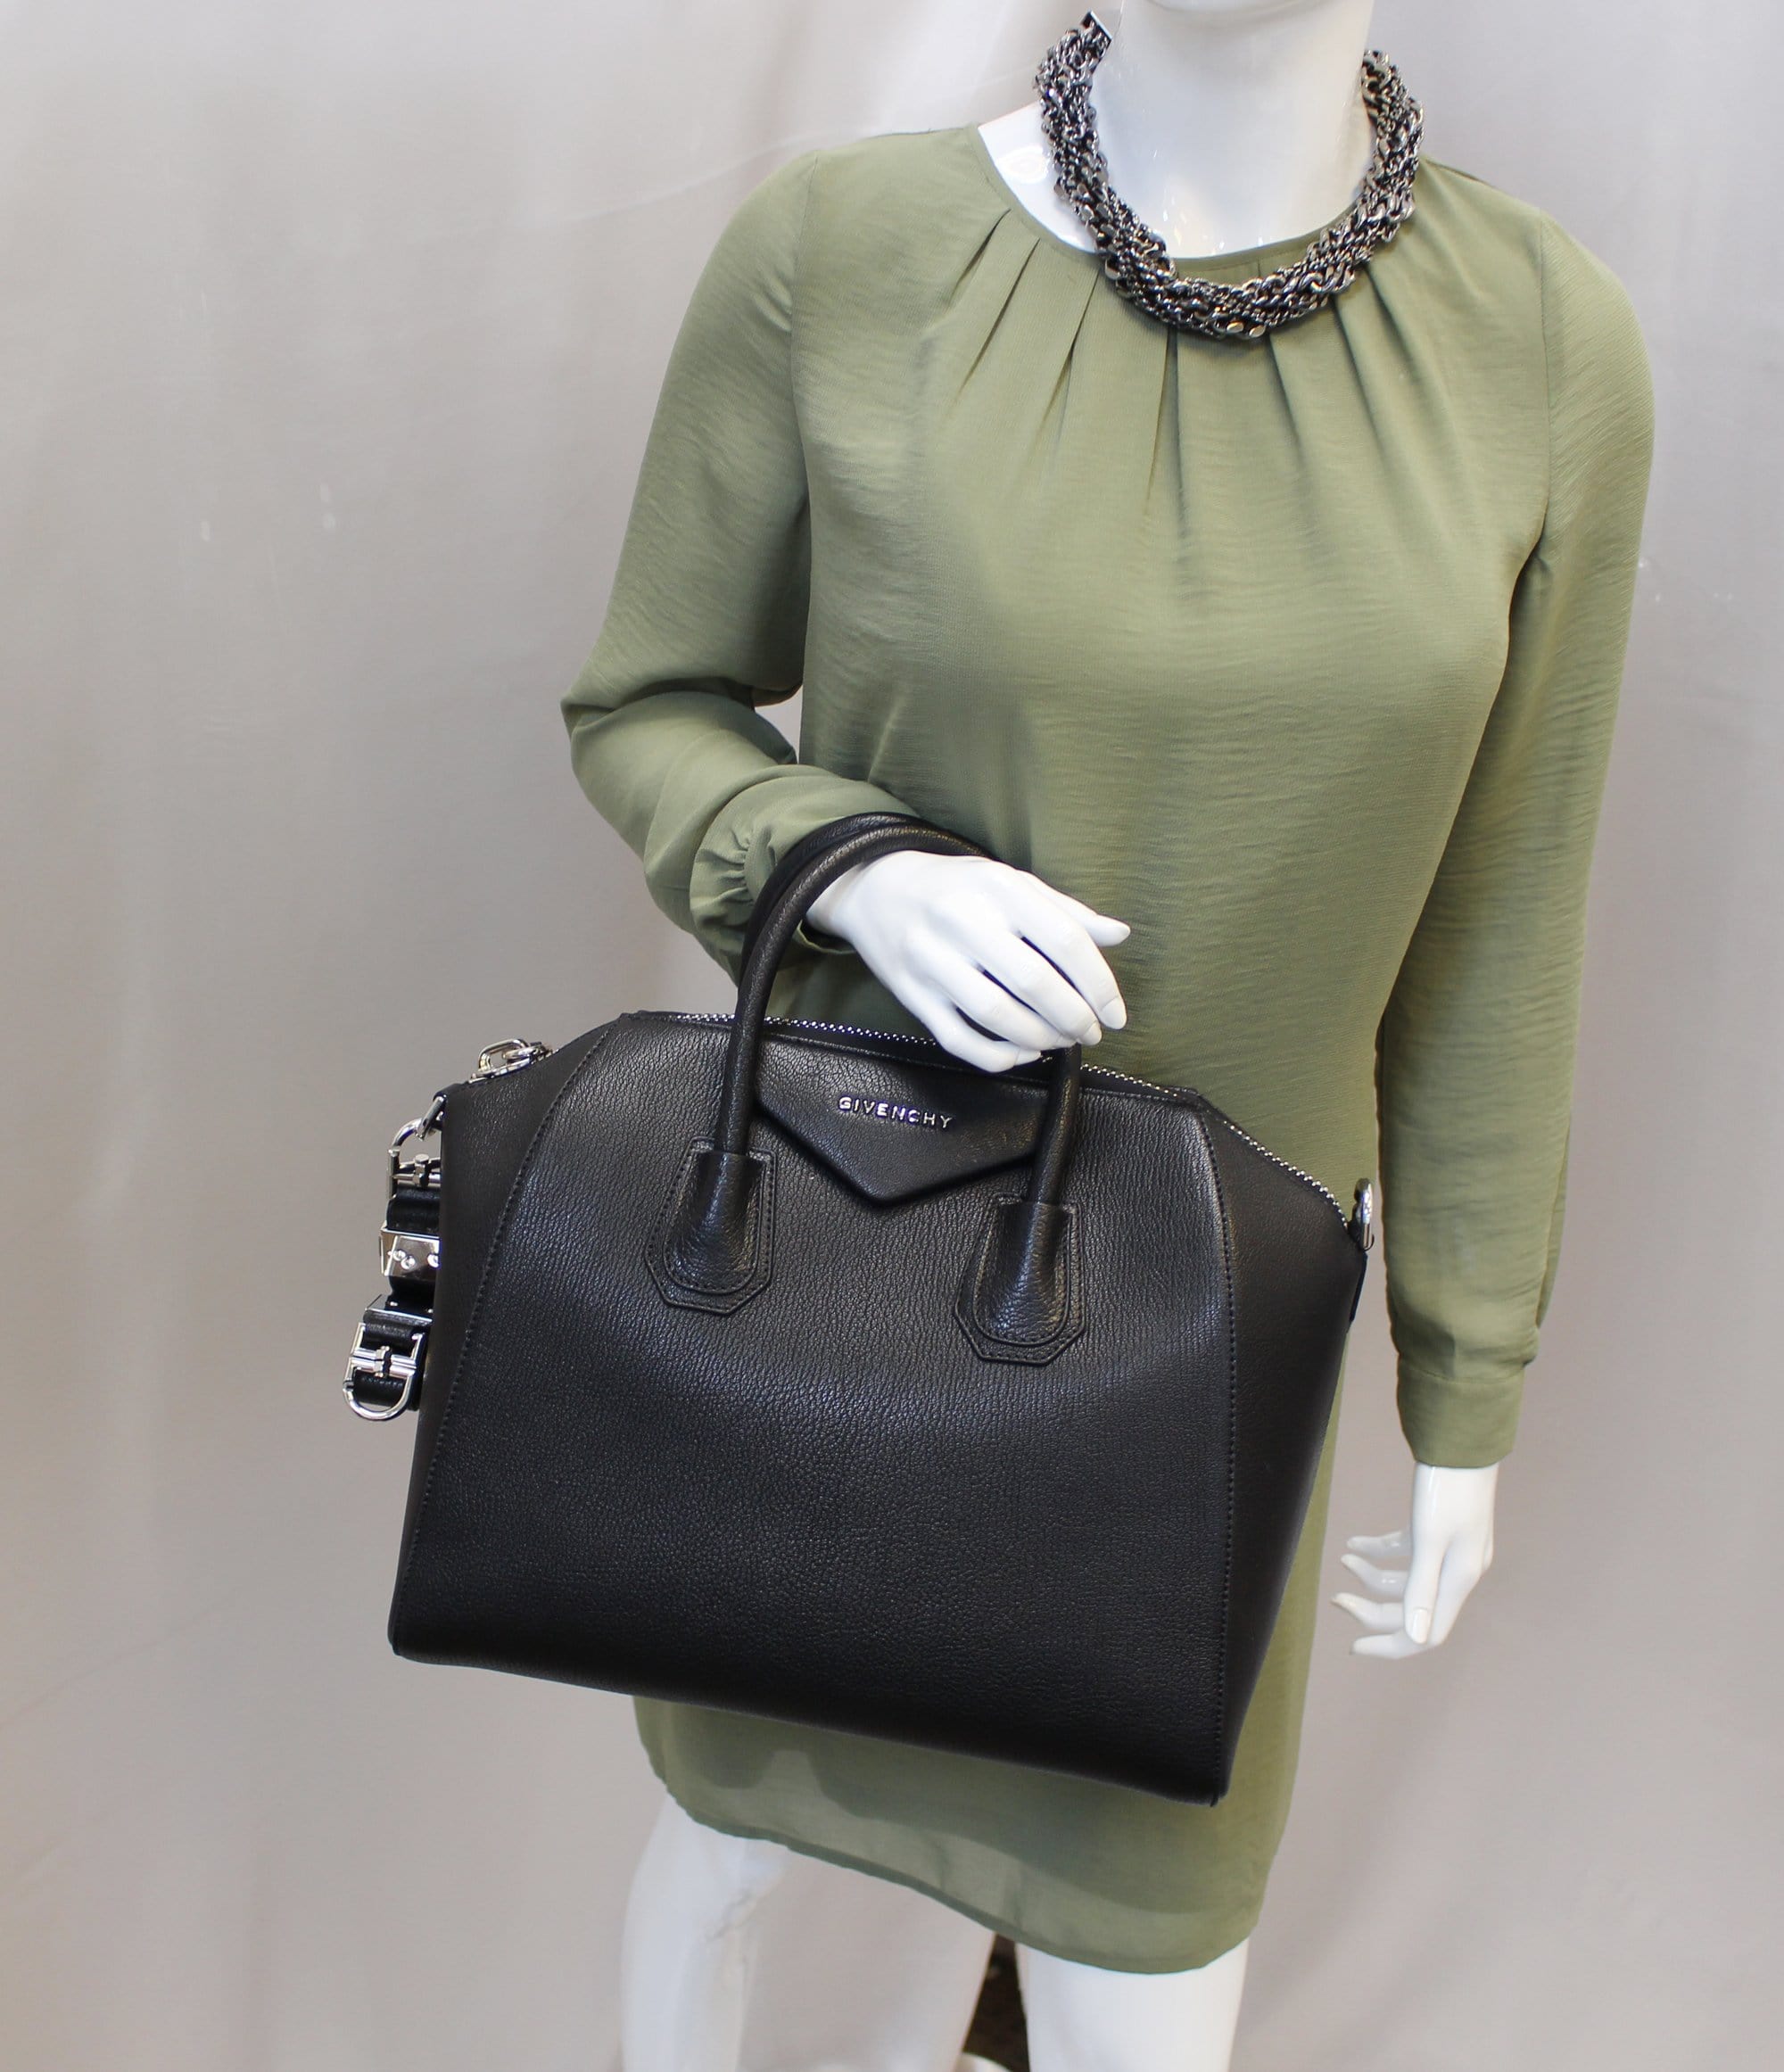 Givenchy Antigona Envelope Clutch - Black Clutches, Handbags